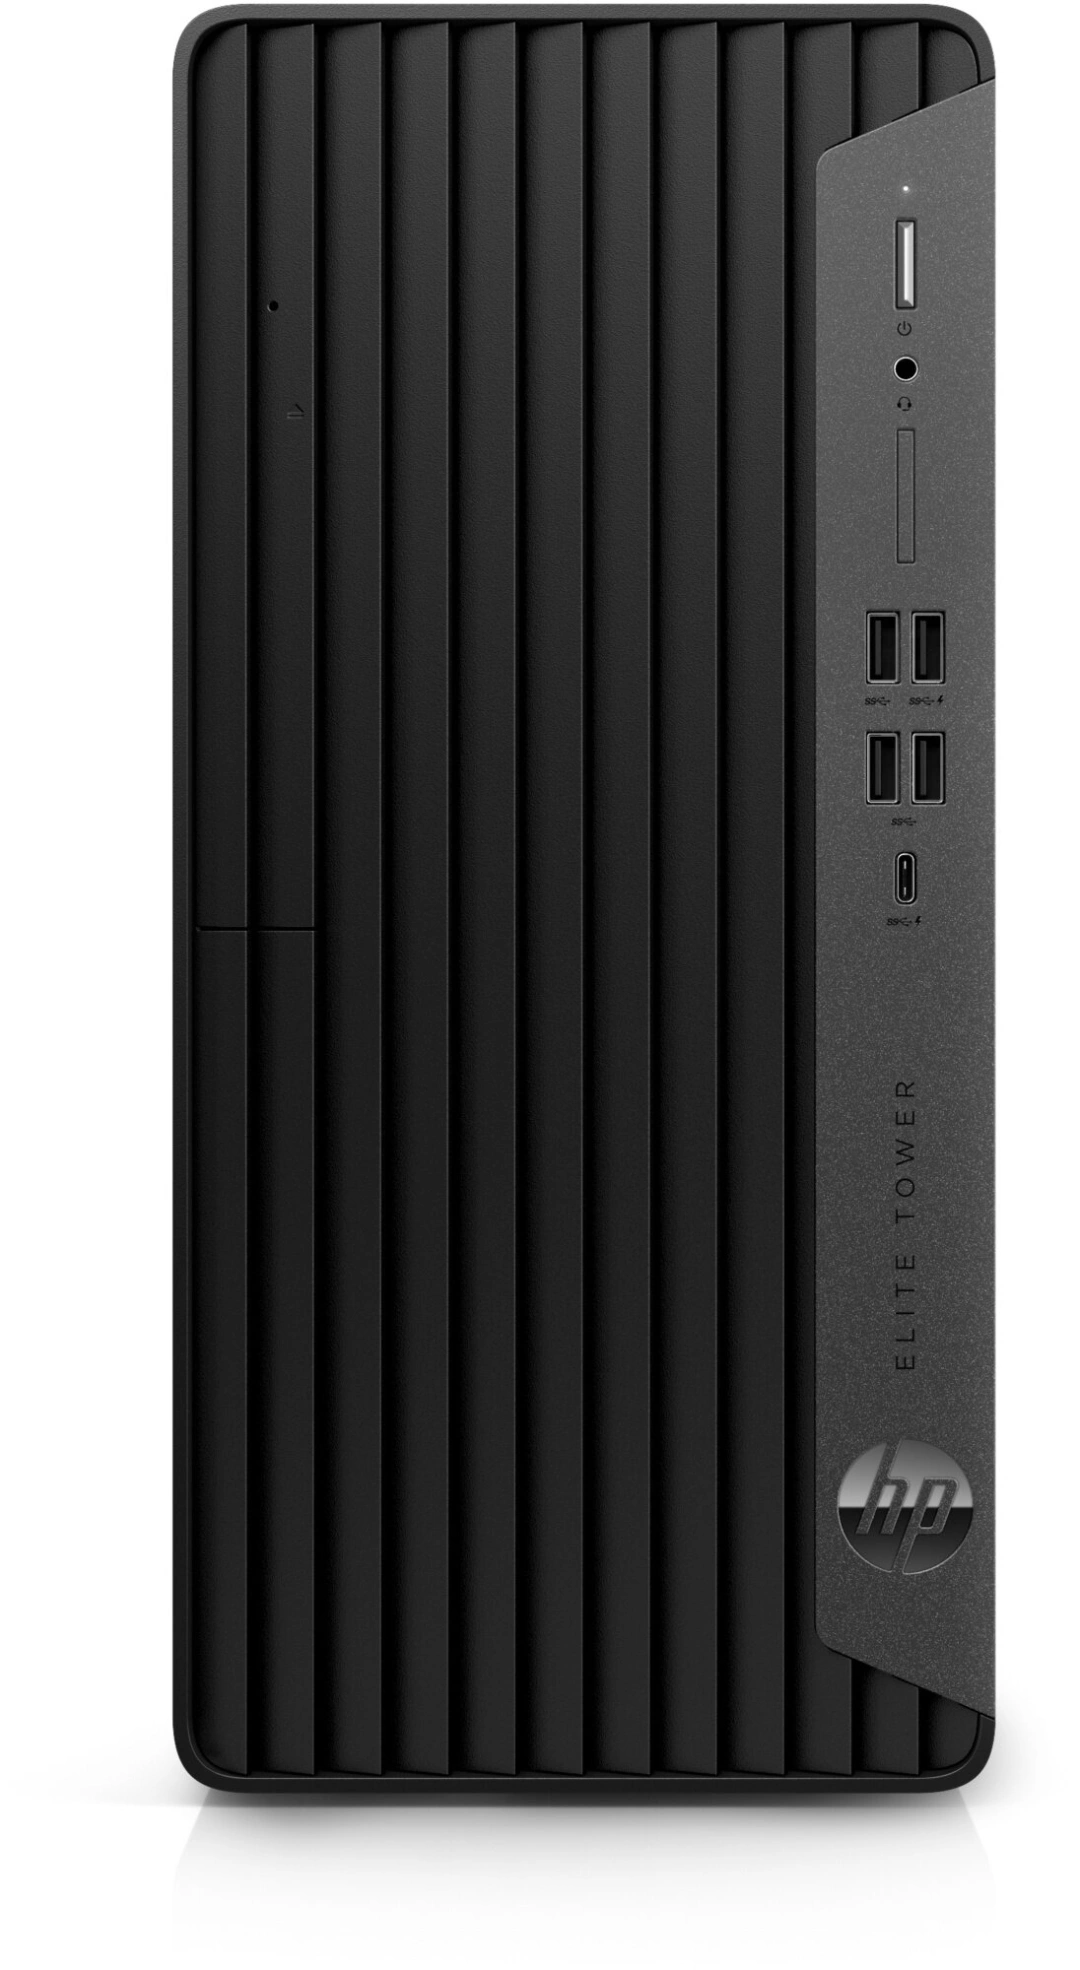 HP Elite Tower 800 G9, black (7B194EA)